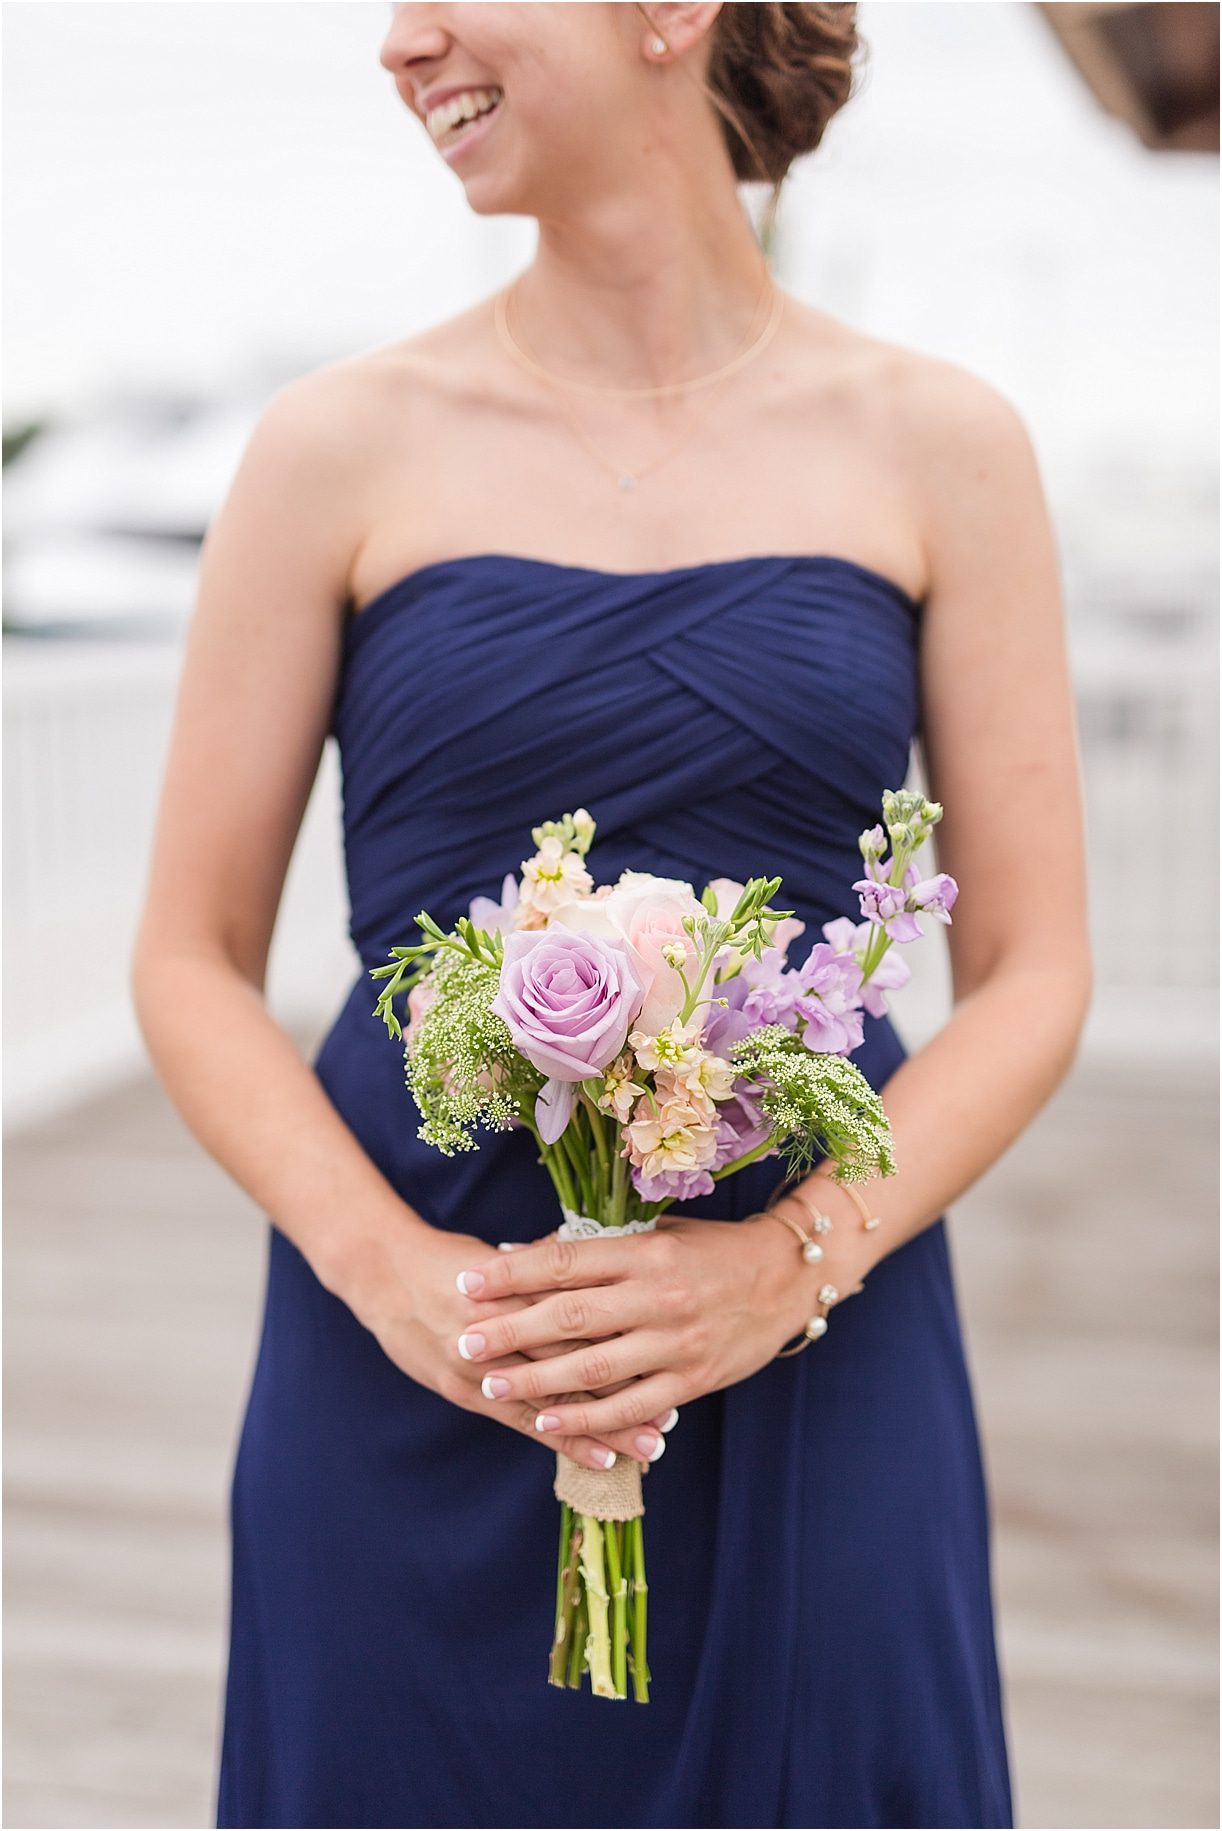 A Waterside Virginia Beach Wedding as seen on Hill City Bride Virginia Wedding Blog - lavender, purple, navy, marina